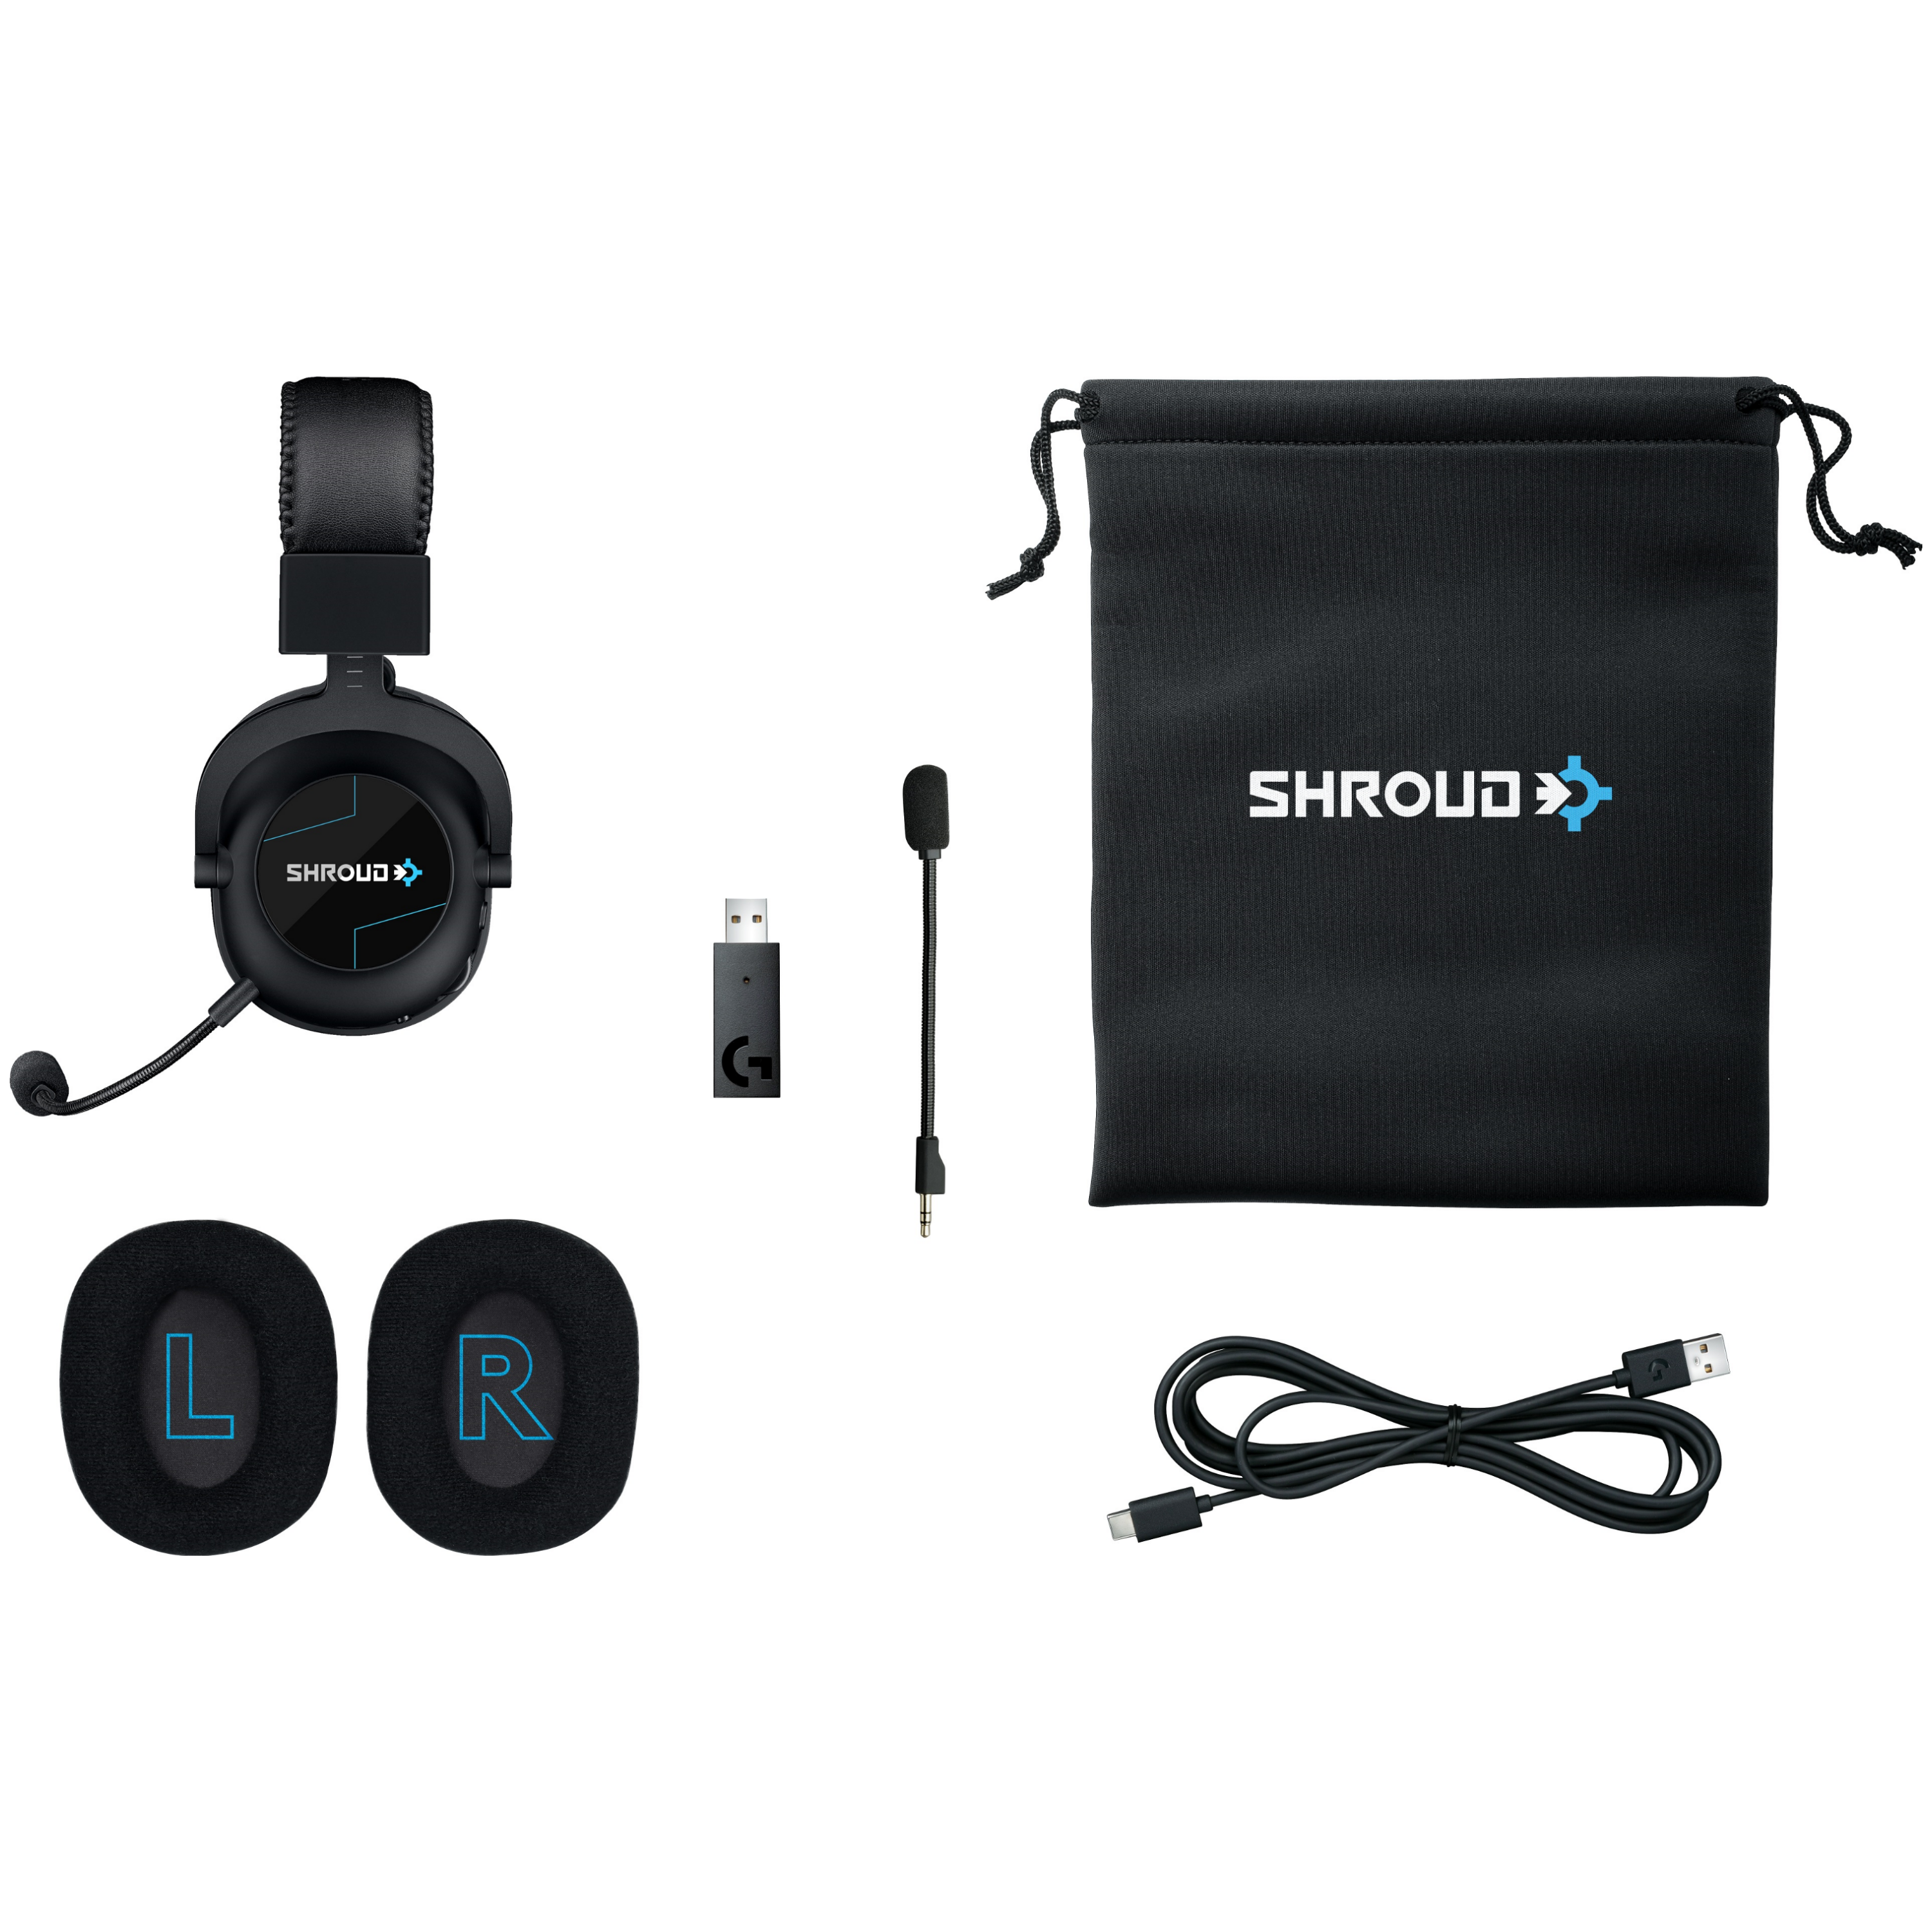 shroud wireless headset